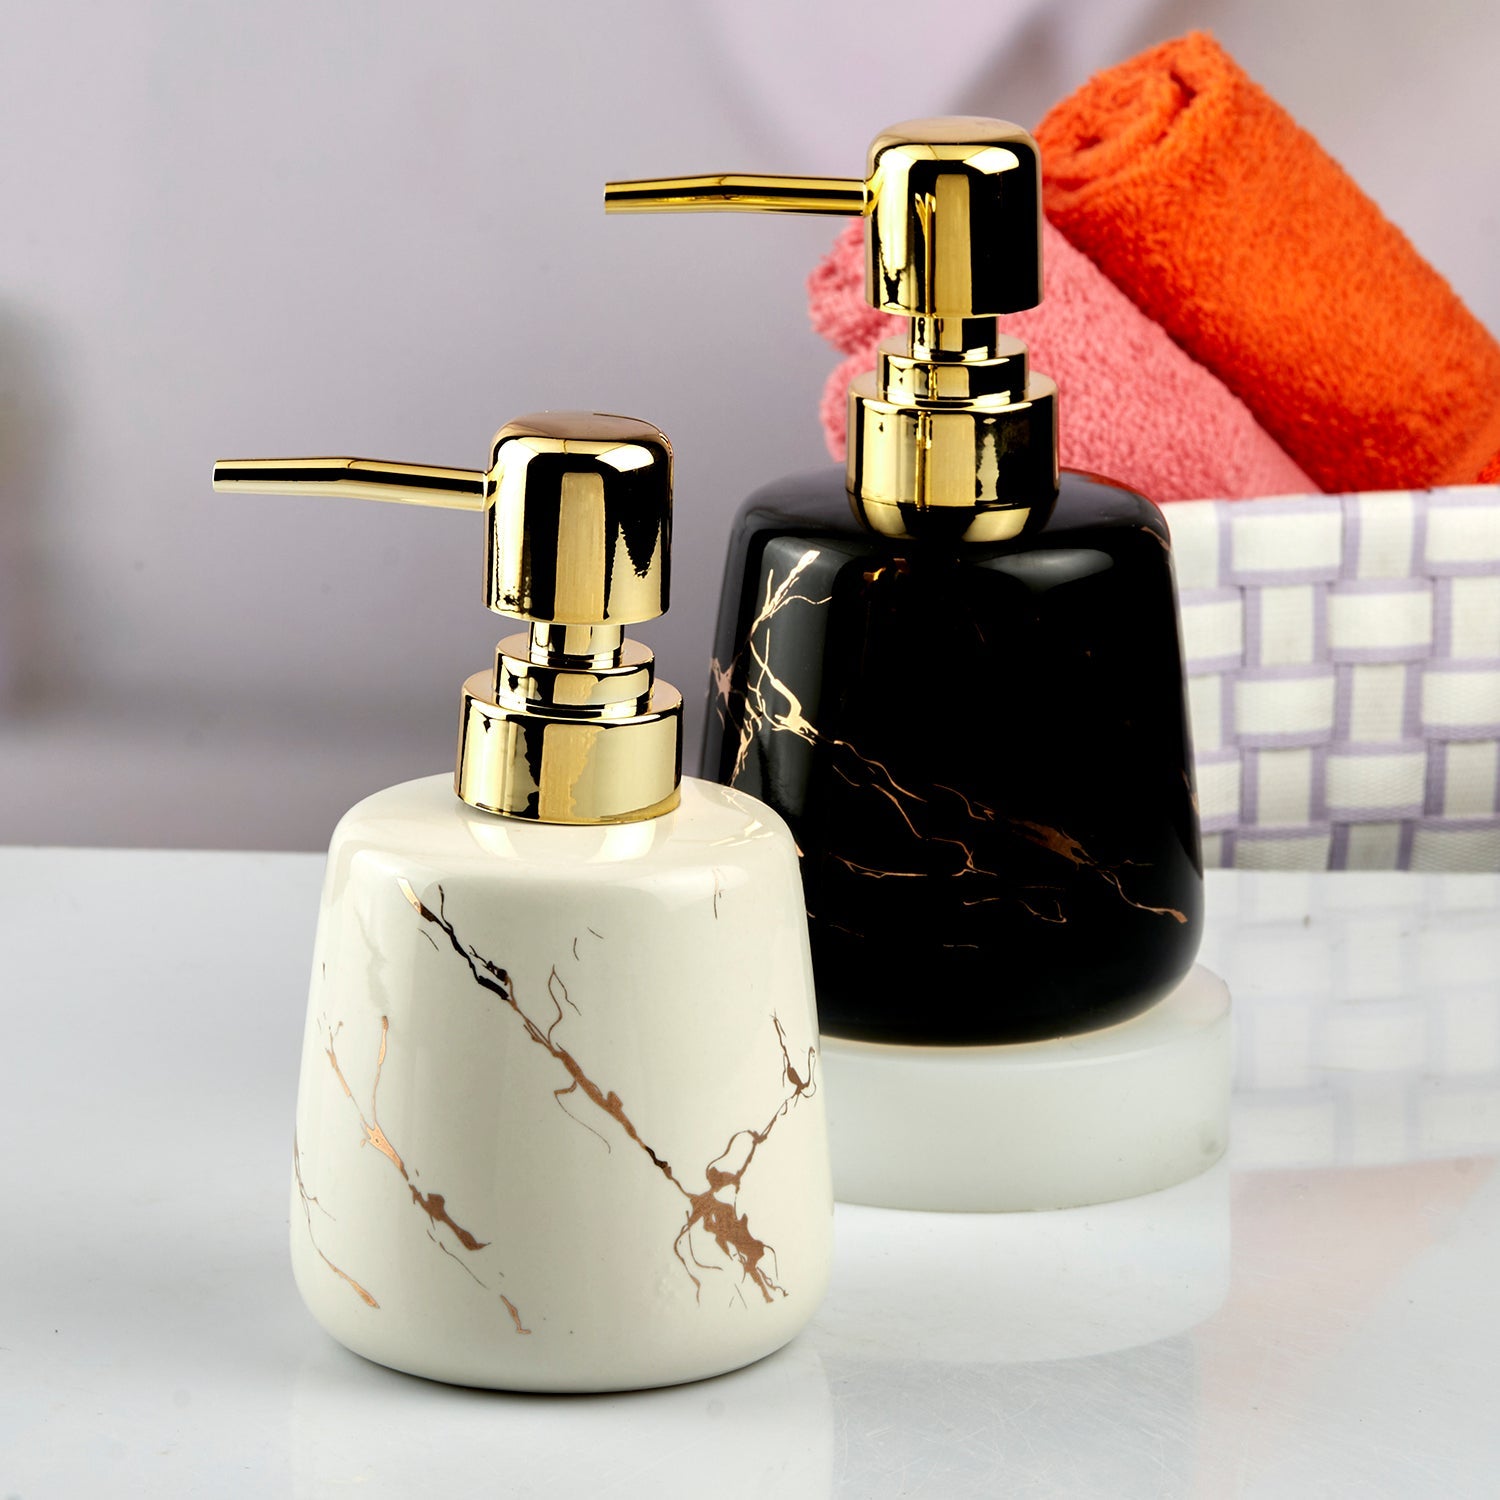 Ceramic Soap Dispenser liquid handwash pump for Bathroom, Set of 1, Black (10728)